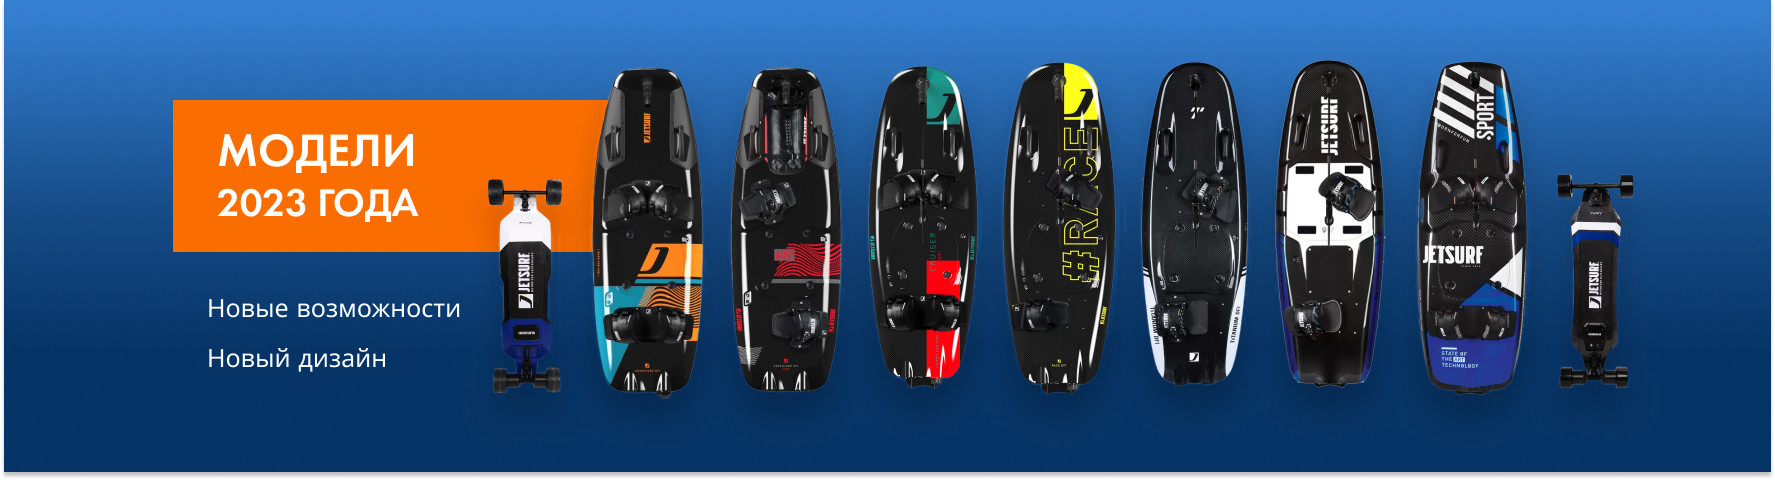 Модели Jet Surf и Motorized skateboard 2023 года